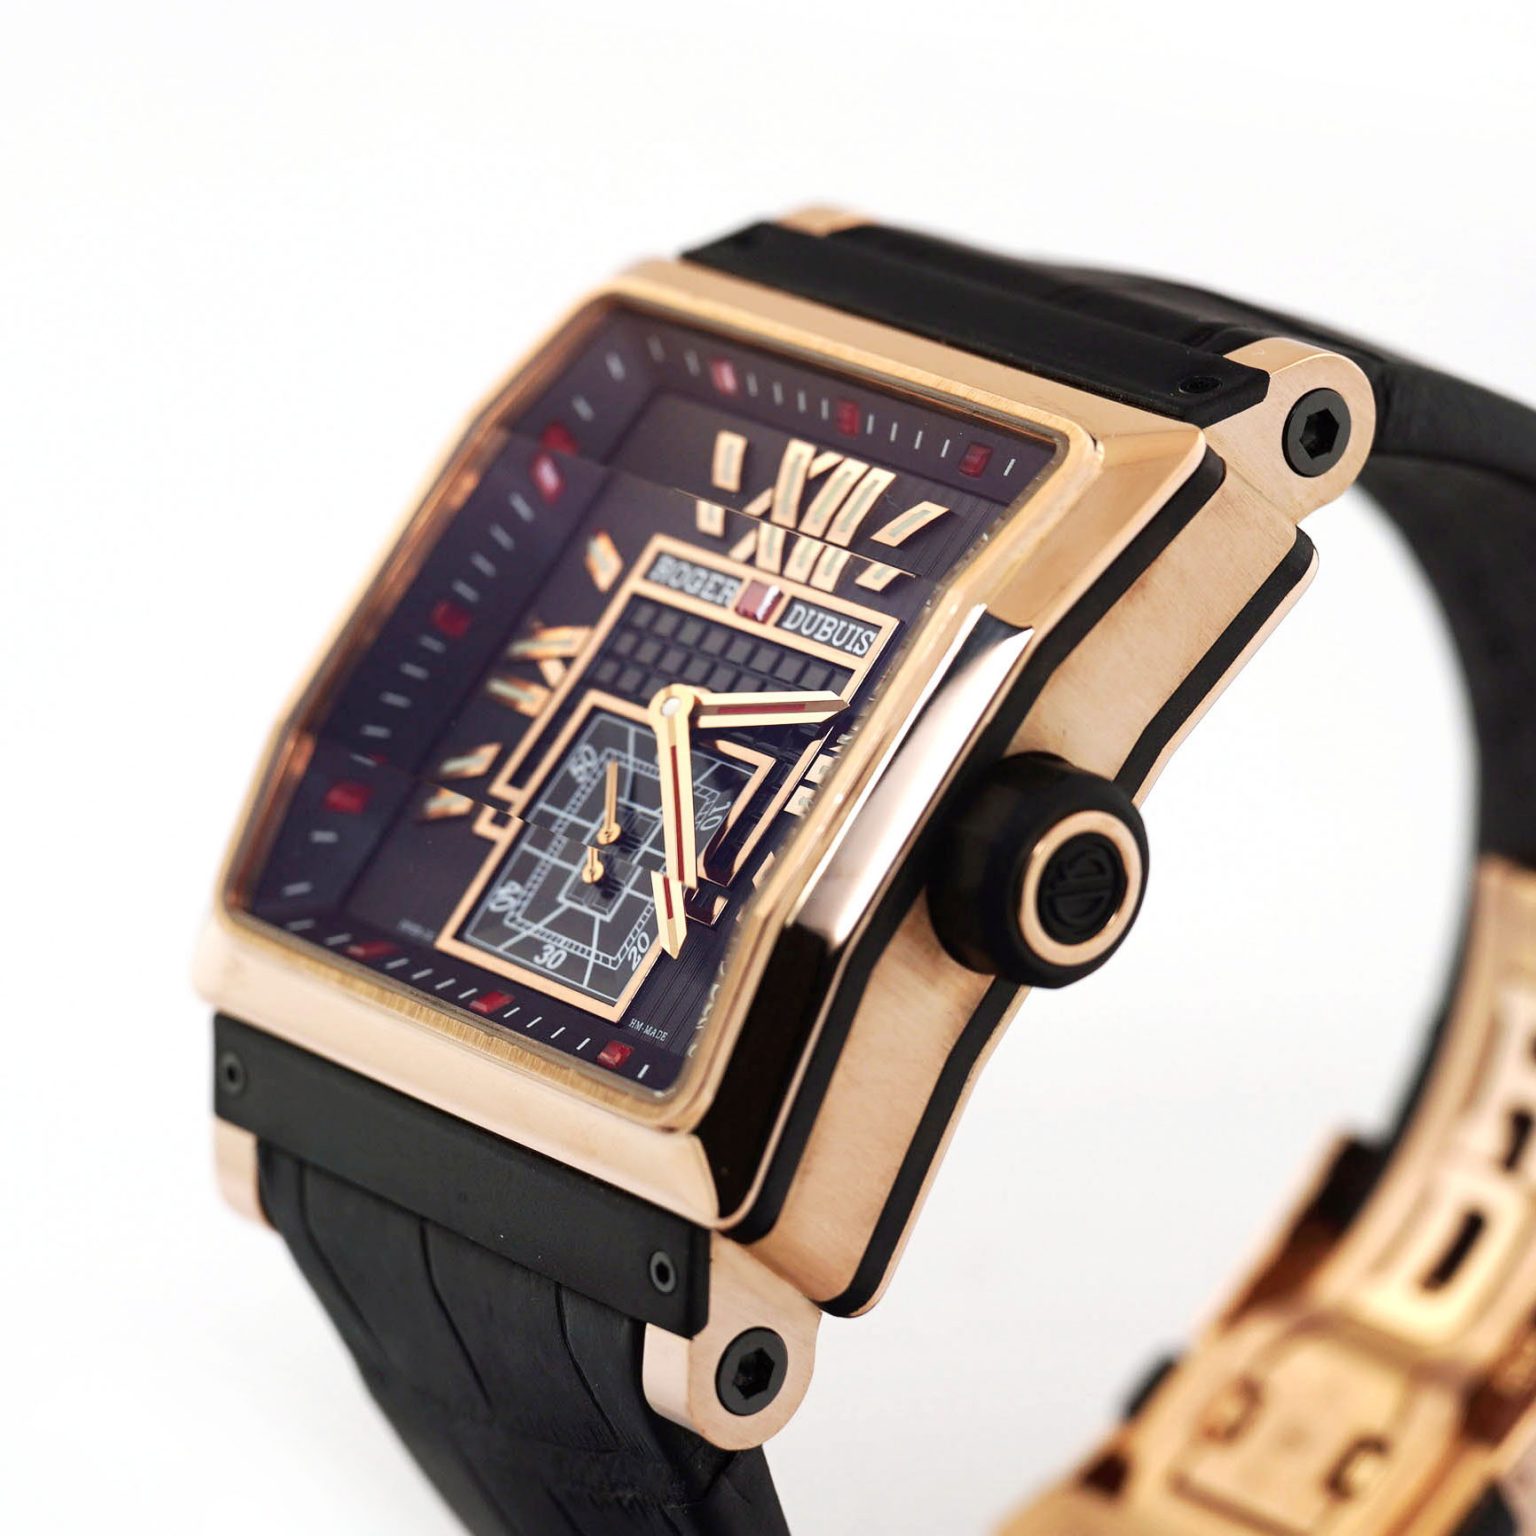 Roger Dubuis King Square Rose Gold Watch KS40 14 51 for $17,500 • Black ...